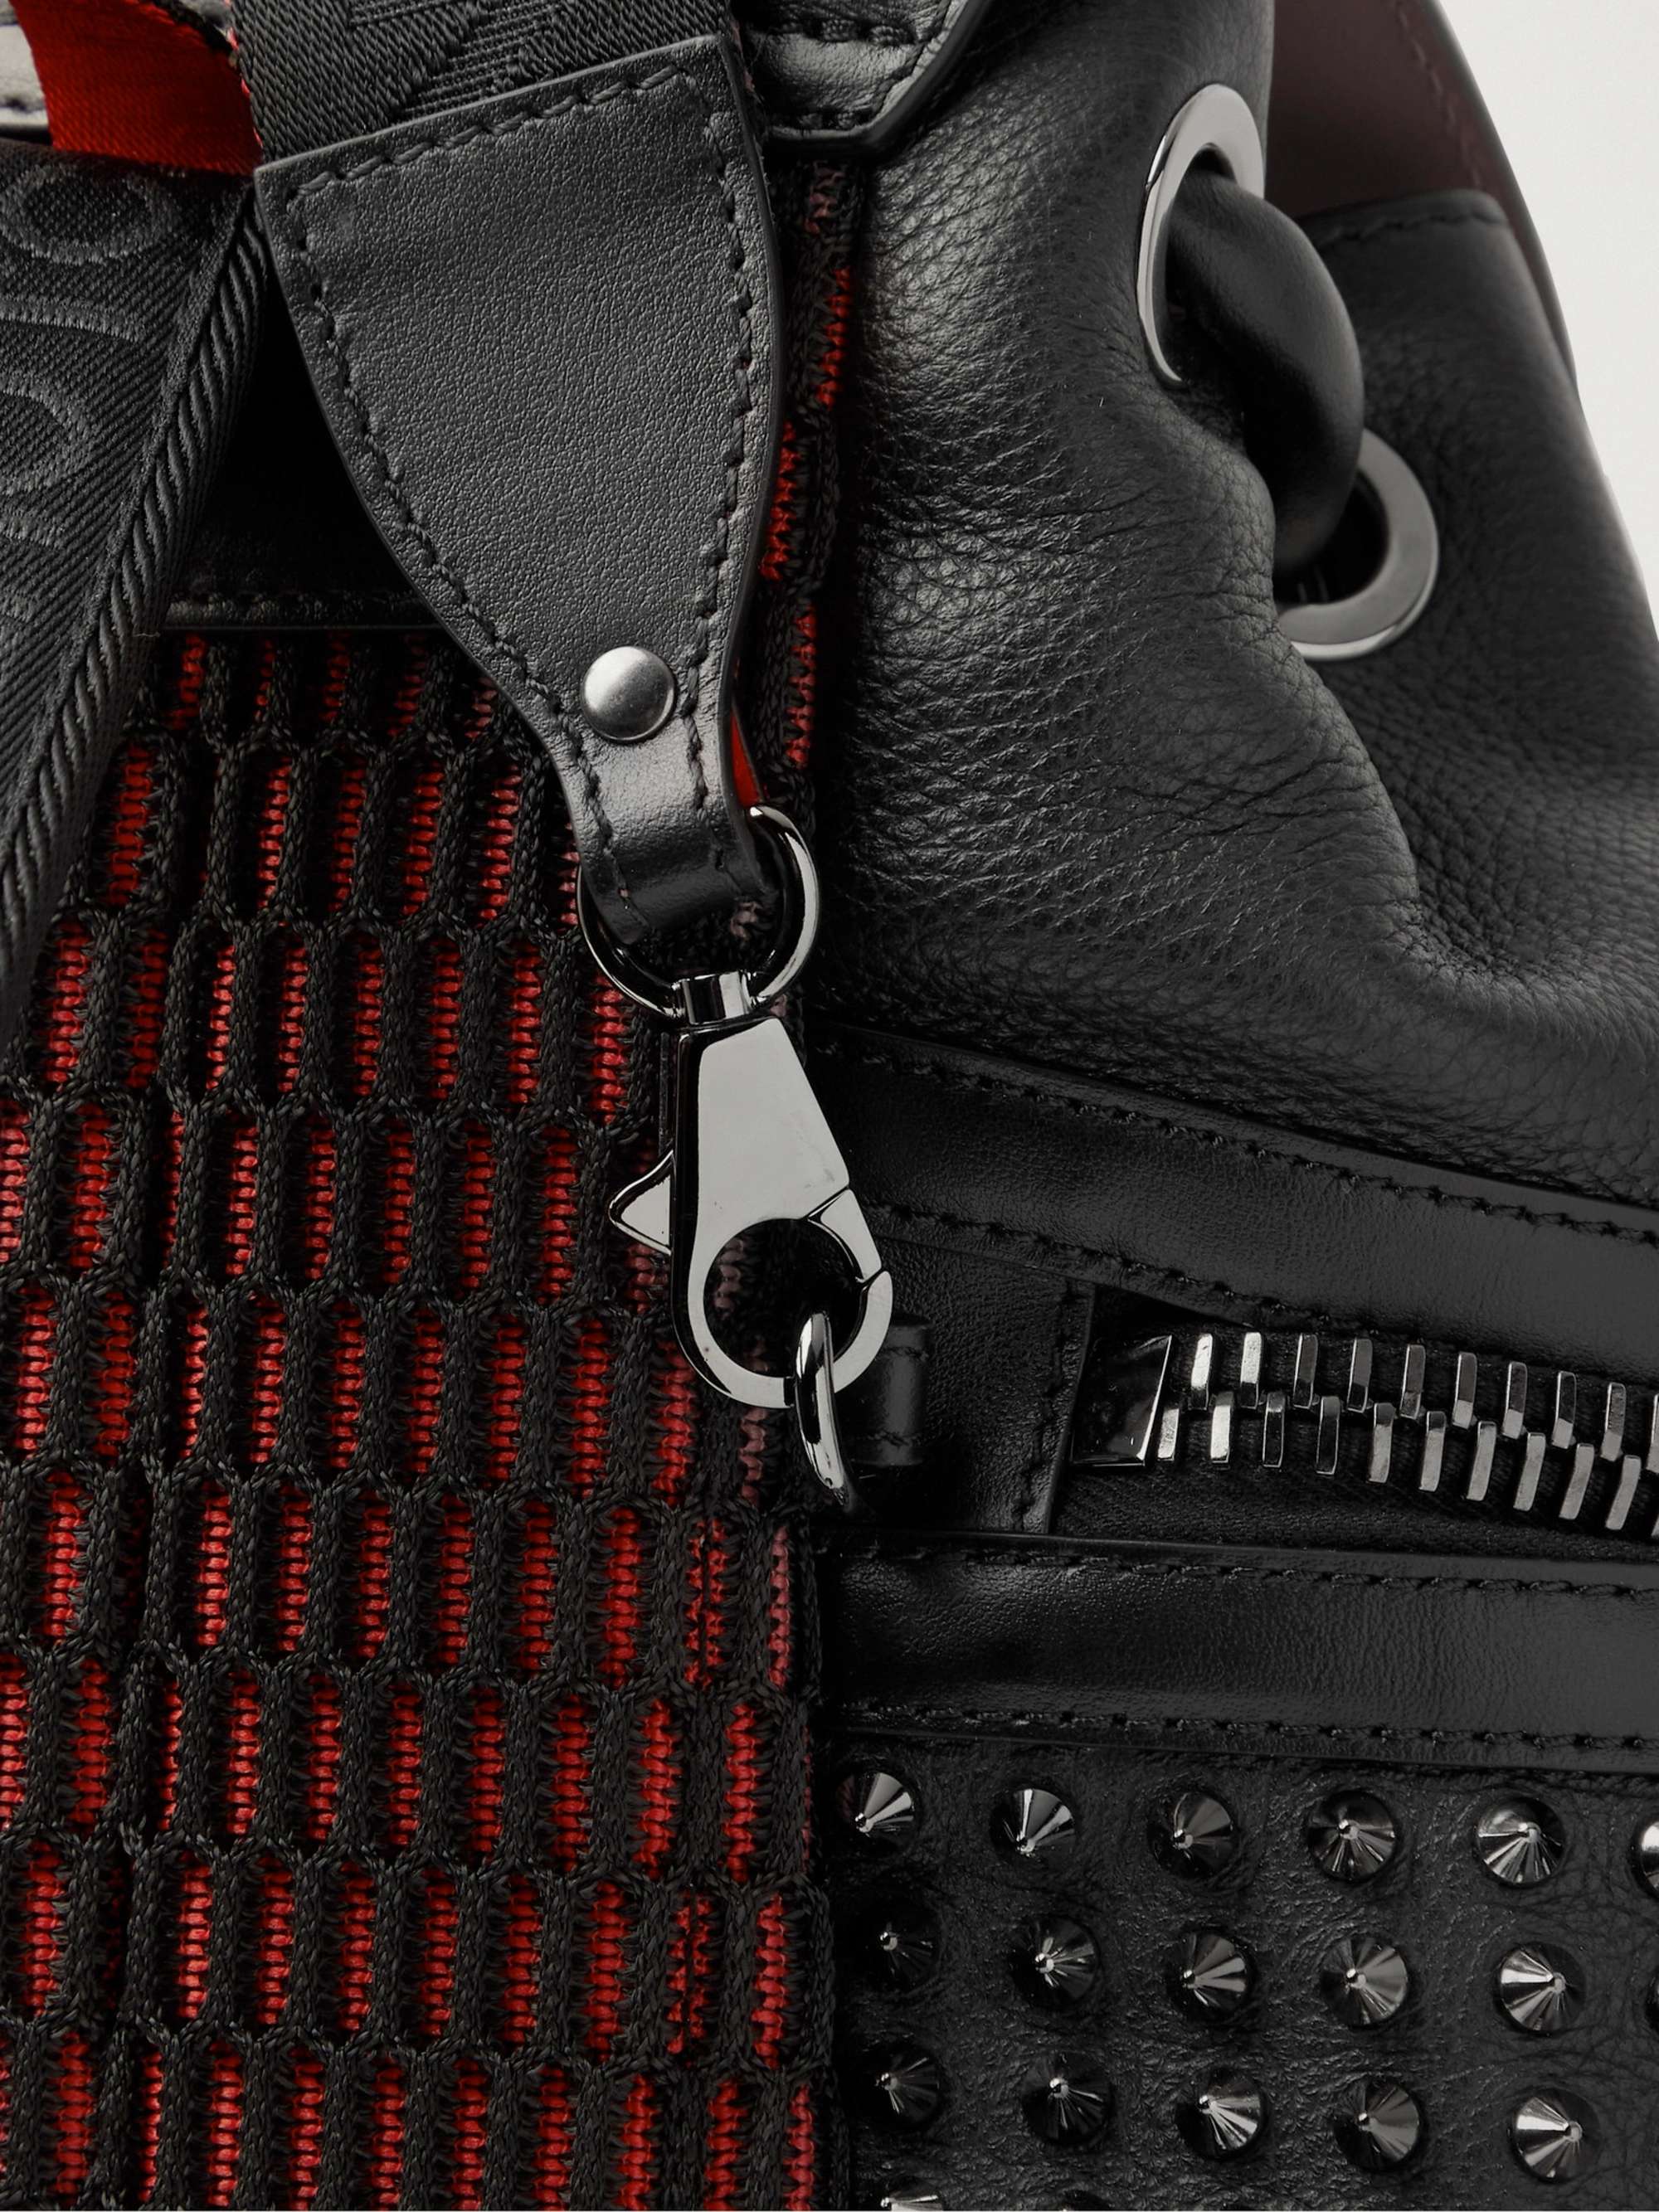 Shop Christian Louboutin BackParis Leather Spike Backpack